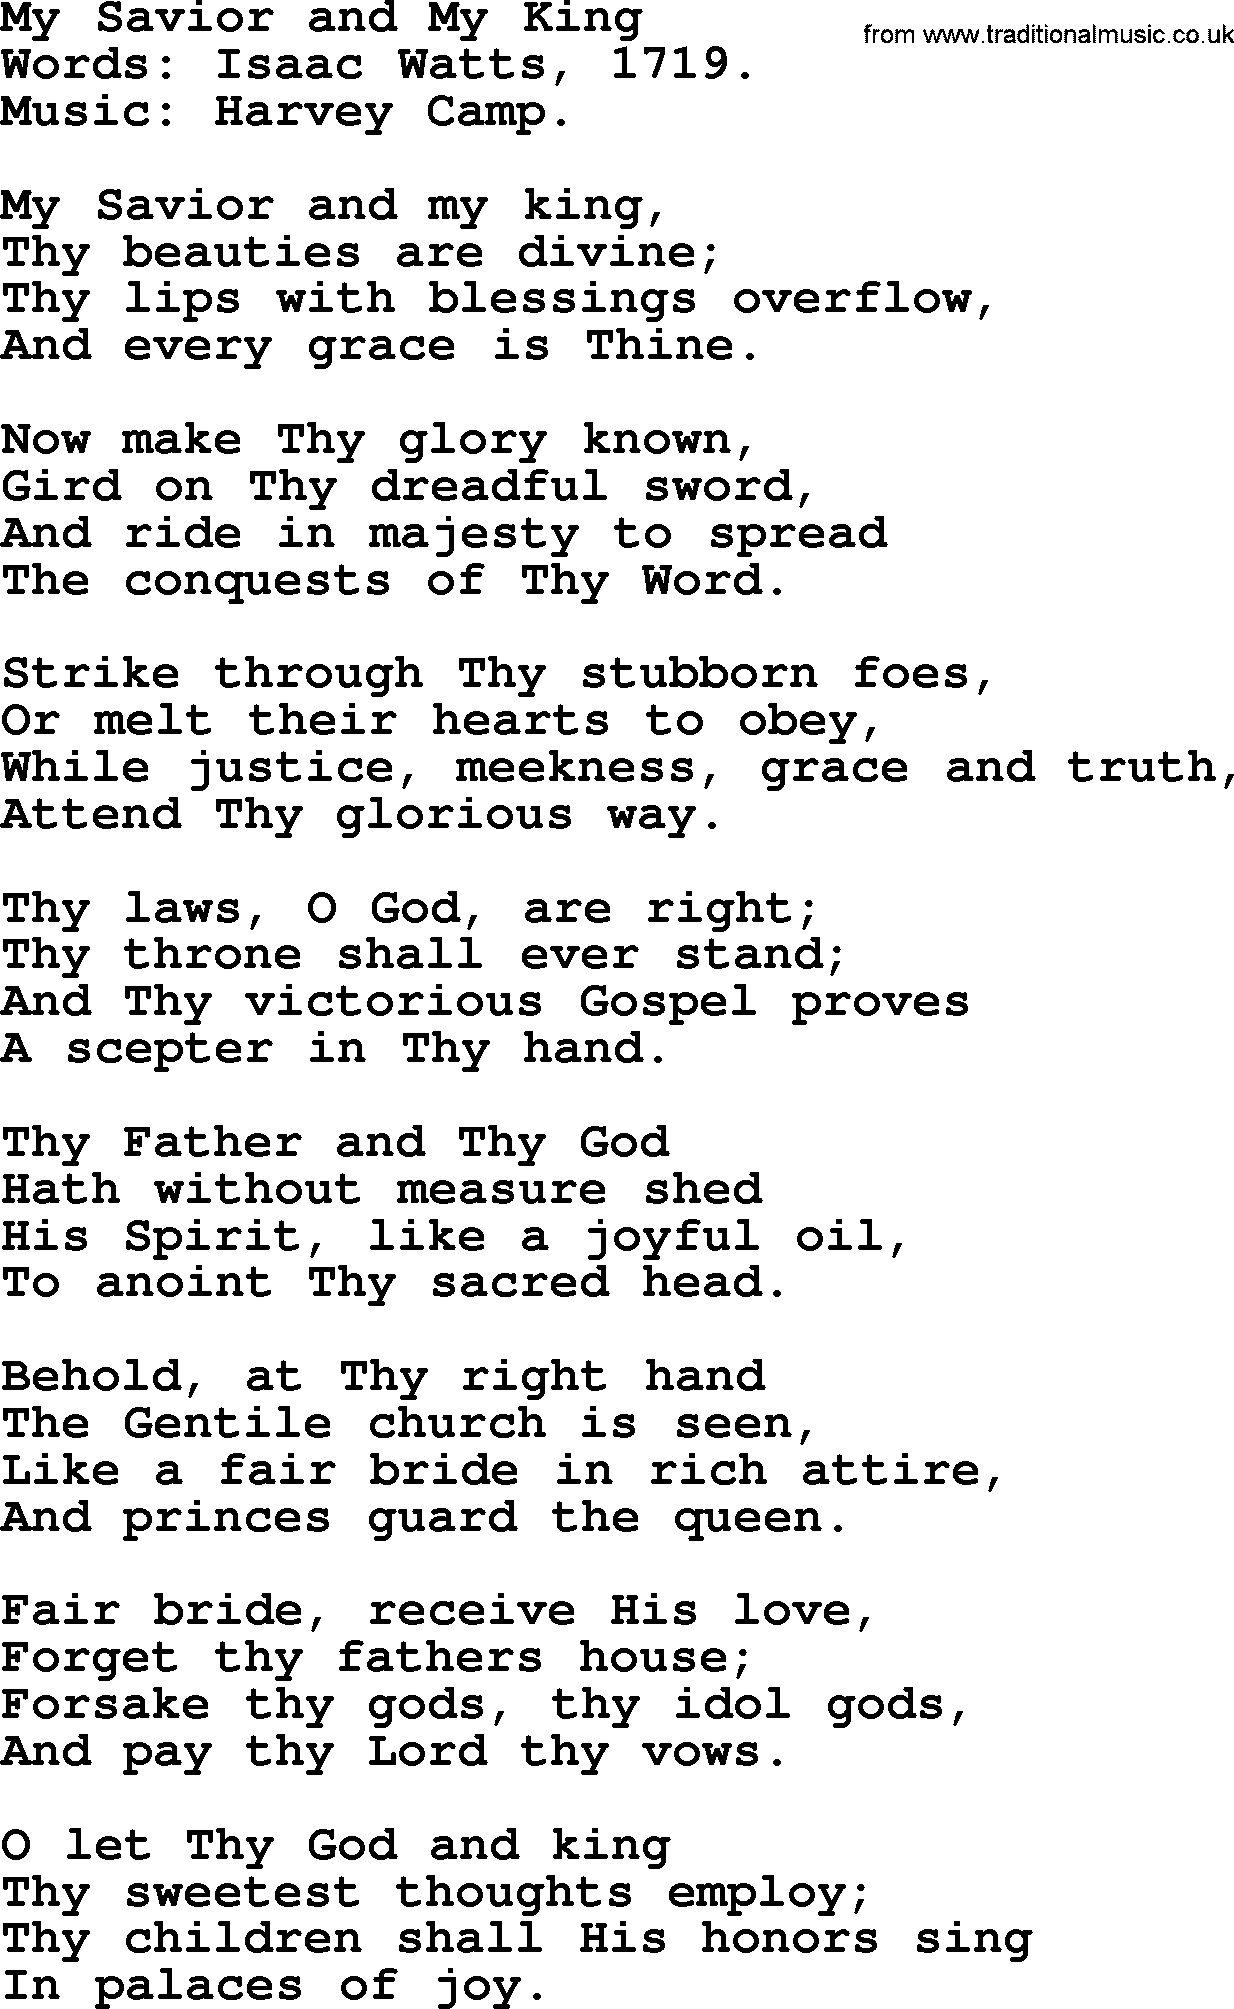 Isaac Watts Christian hymn: My Savior and My King- lyricss